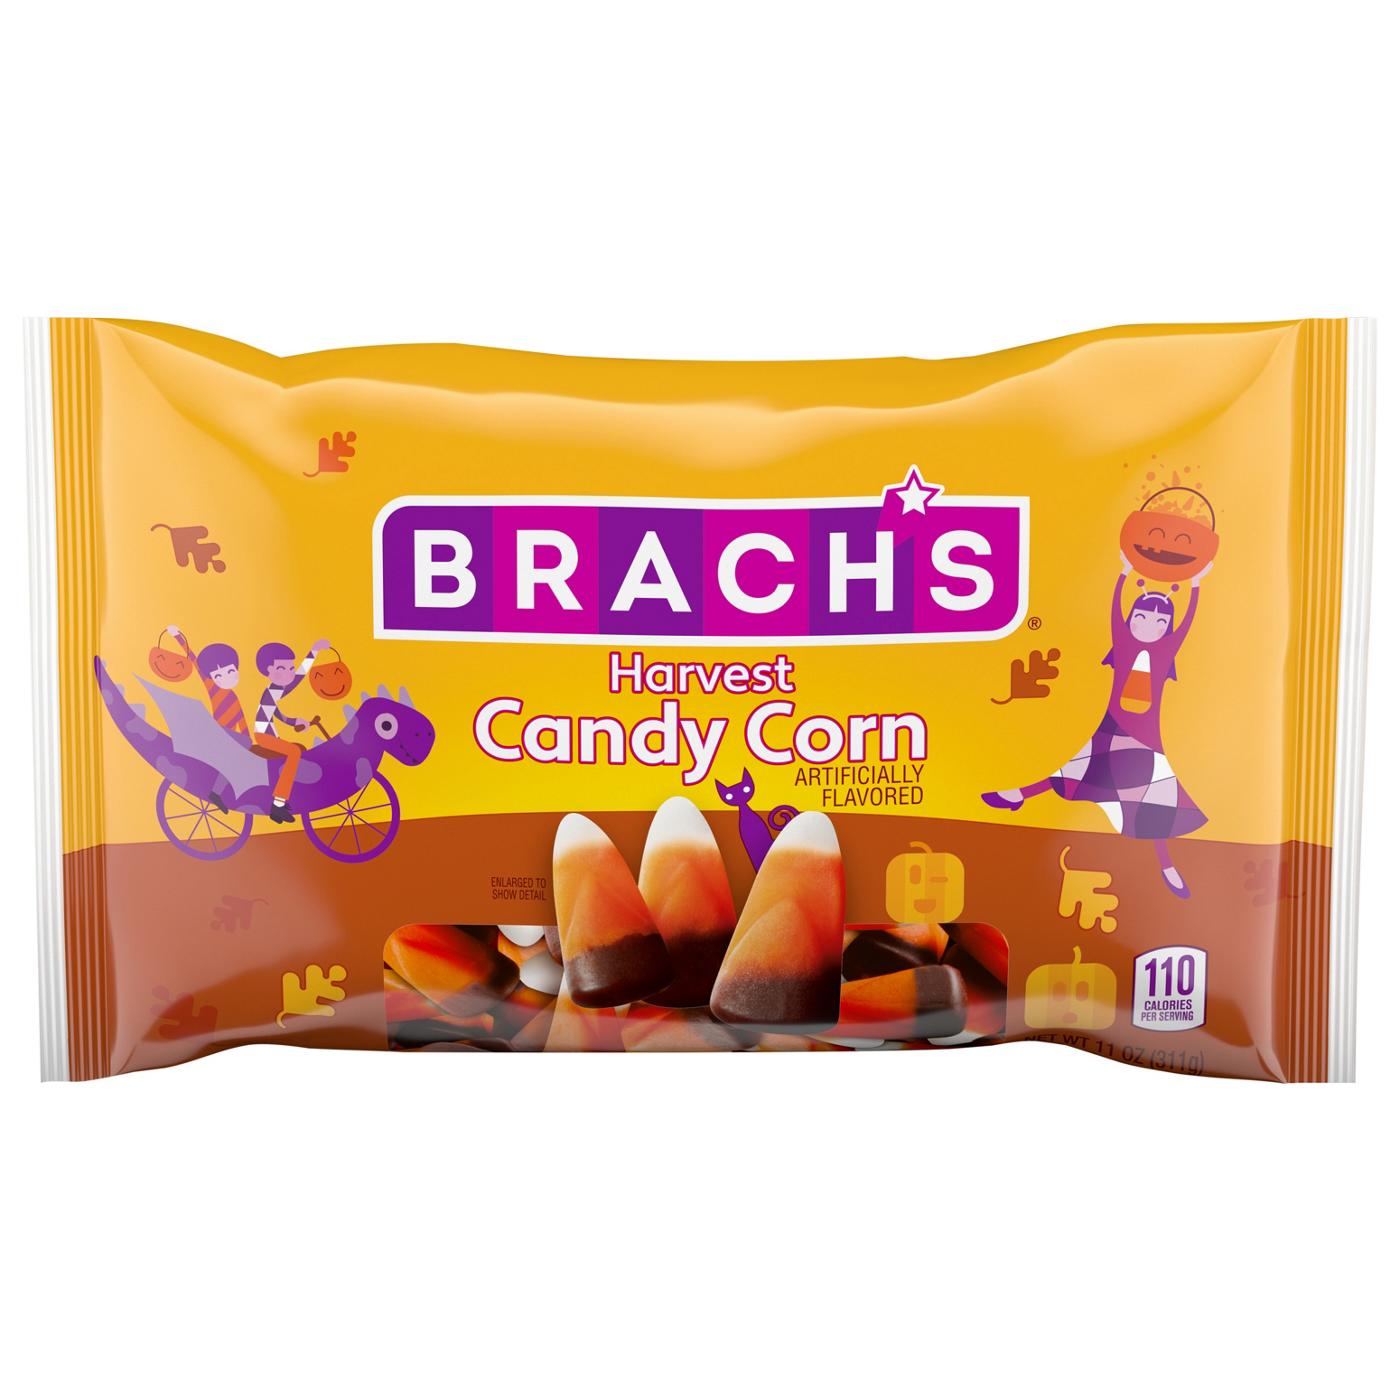 Brach's Harvest Candy Corn; image 1 of 2